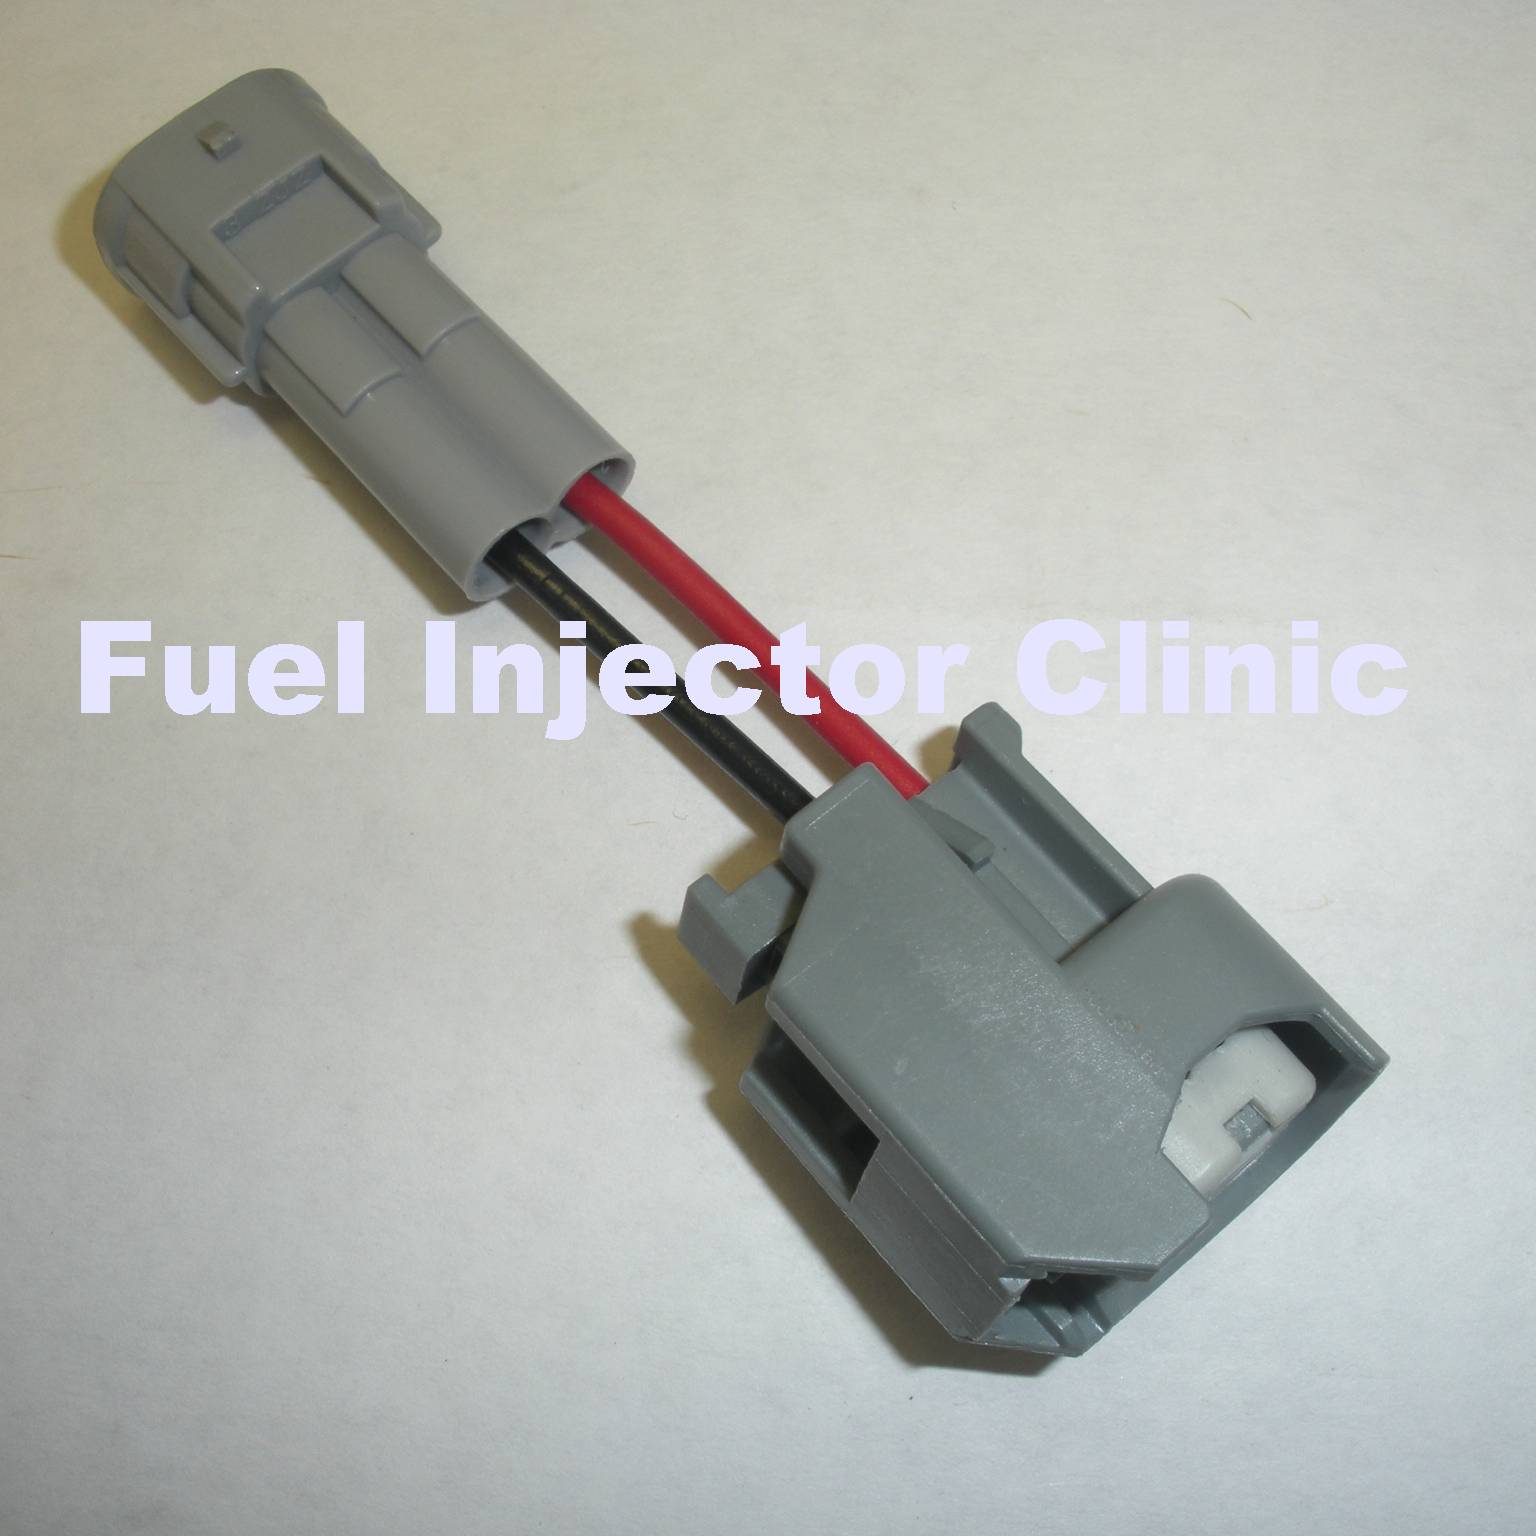 Fuel Injector Clinic Jetronic/EV1 to Denso plug adaptors